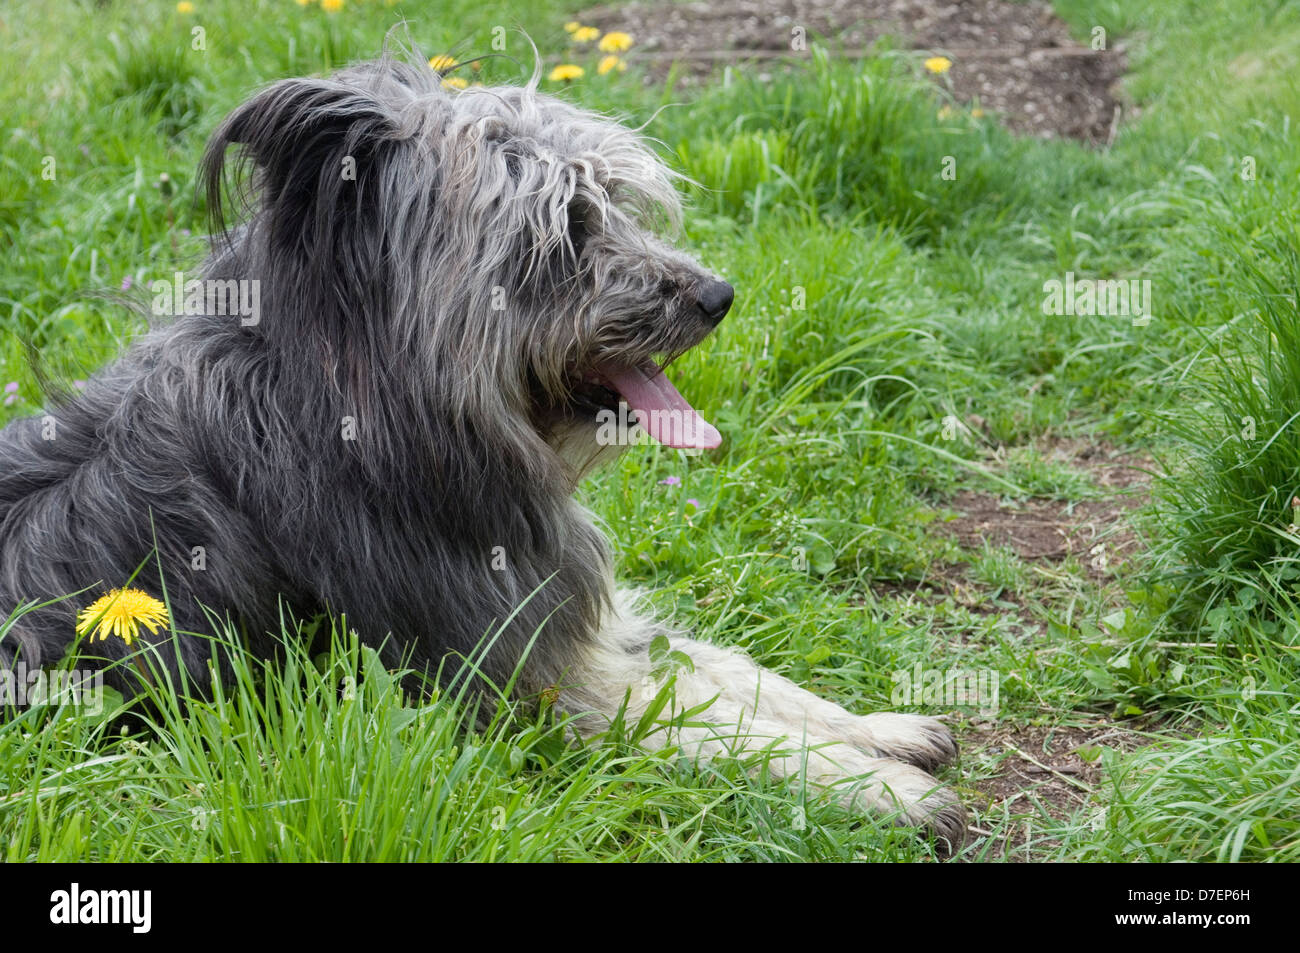 pastore bergamasco shepherd dog lying on grass Stock Photo